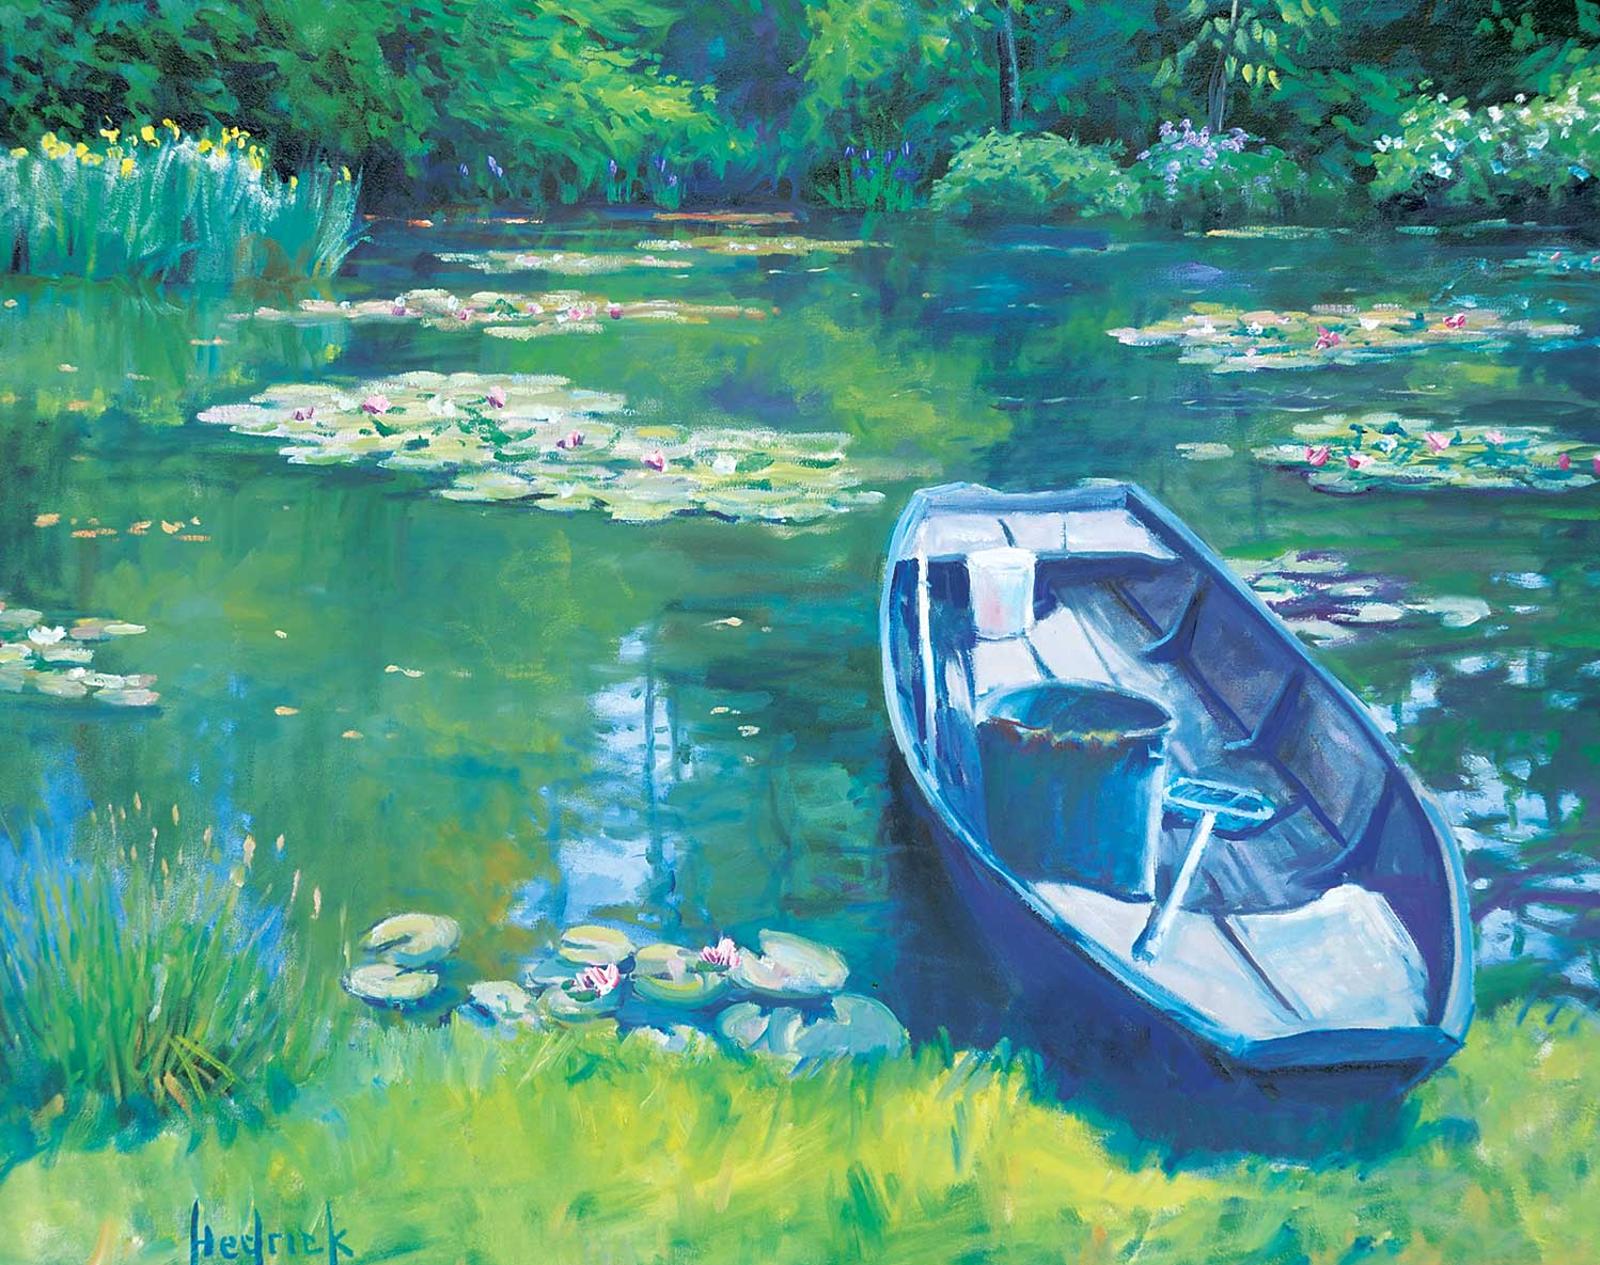 Ron Hedrick (1942) - Untitled - Monet's Pond